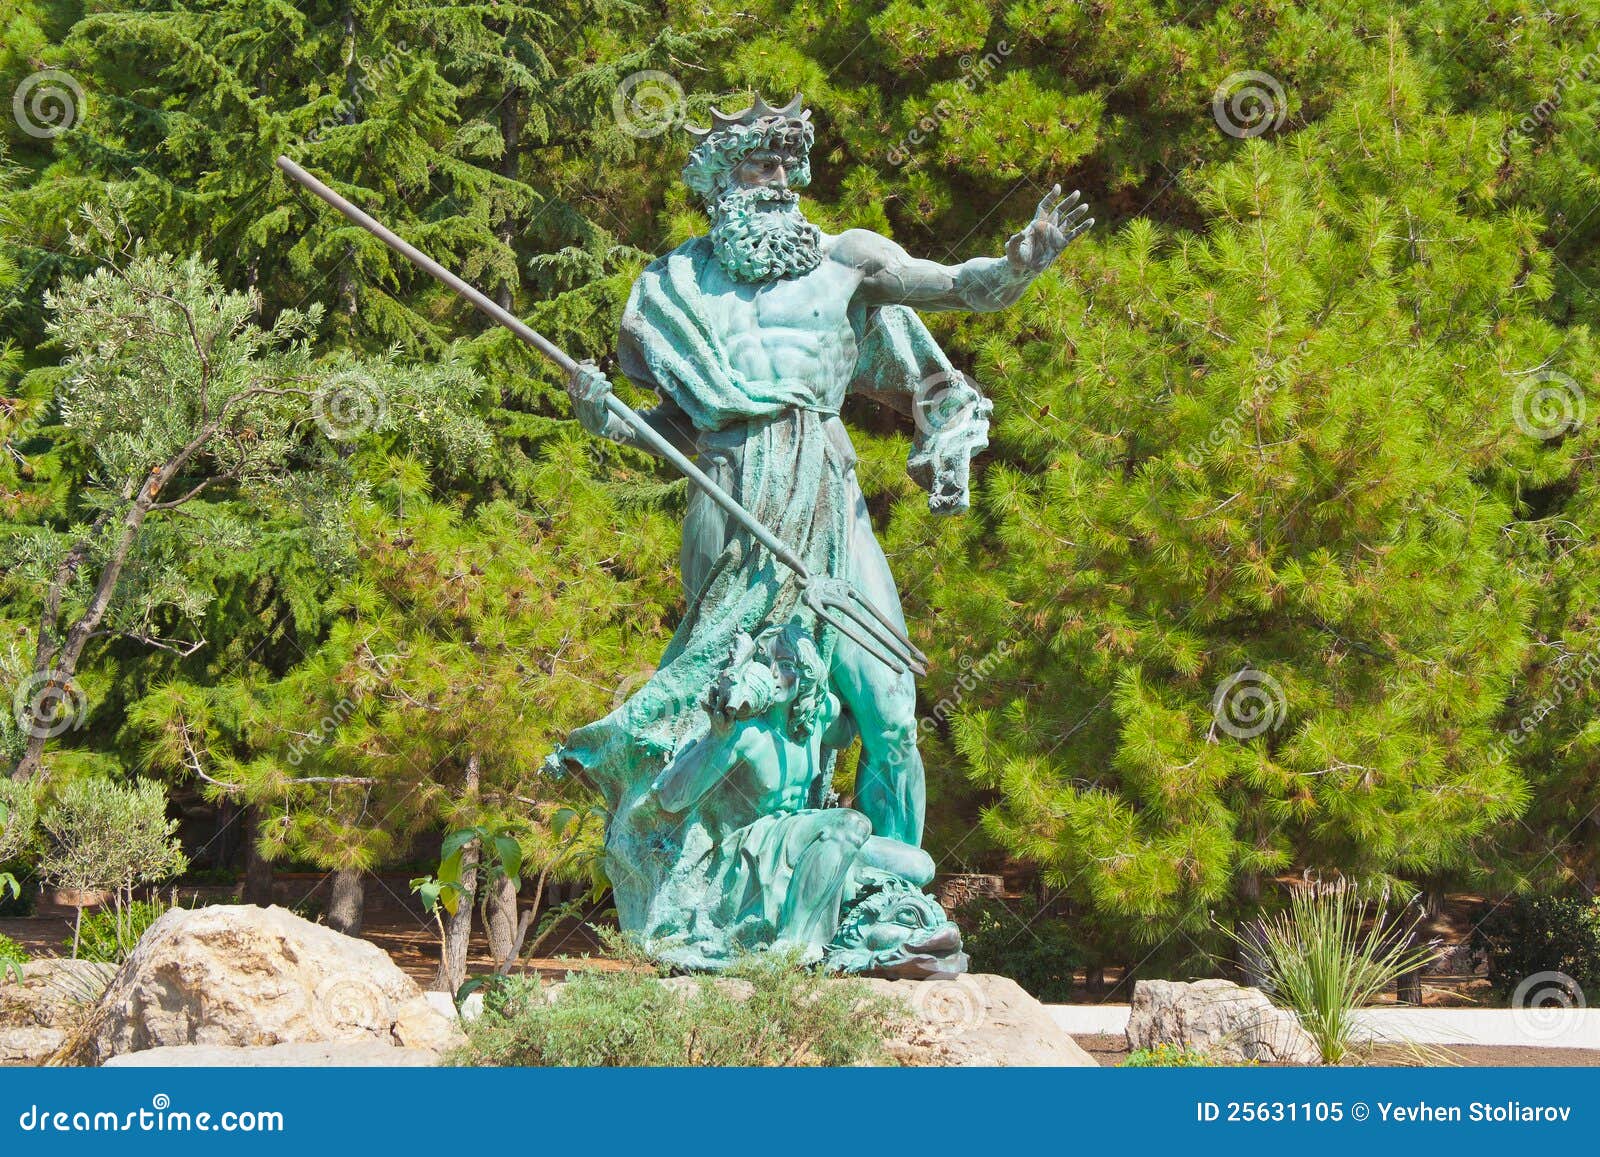 poseidon statue in park in crimea